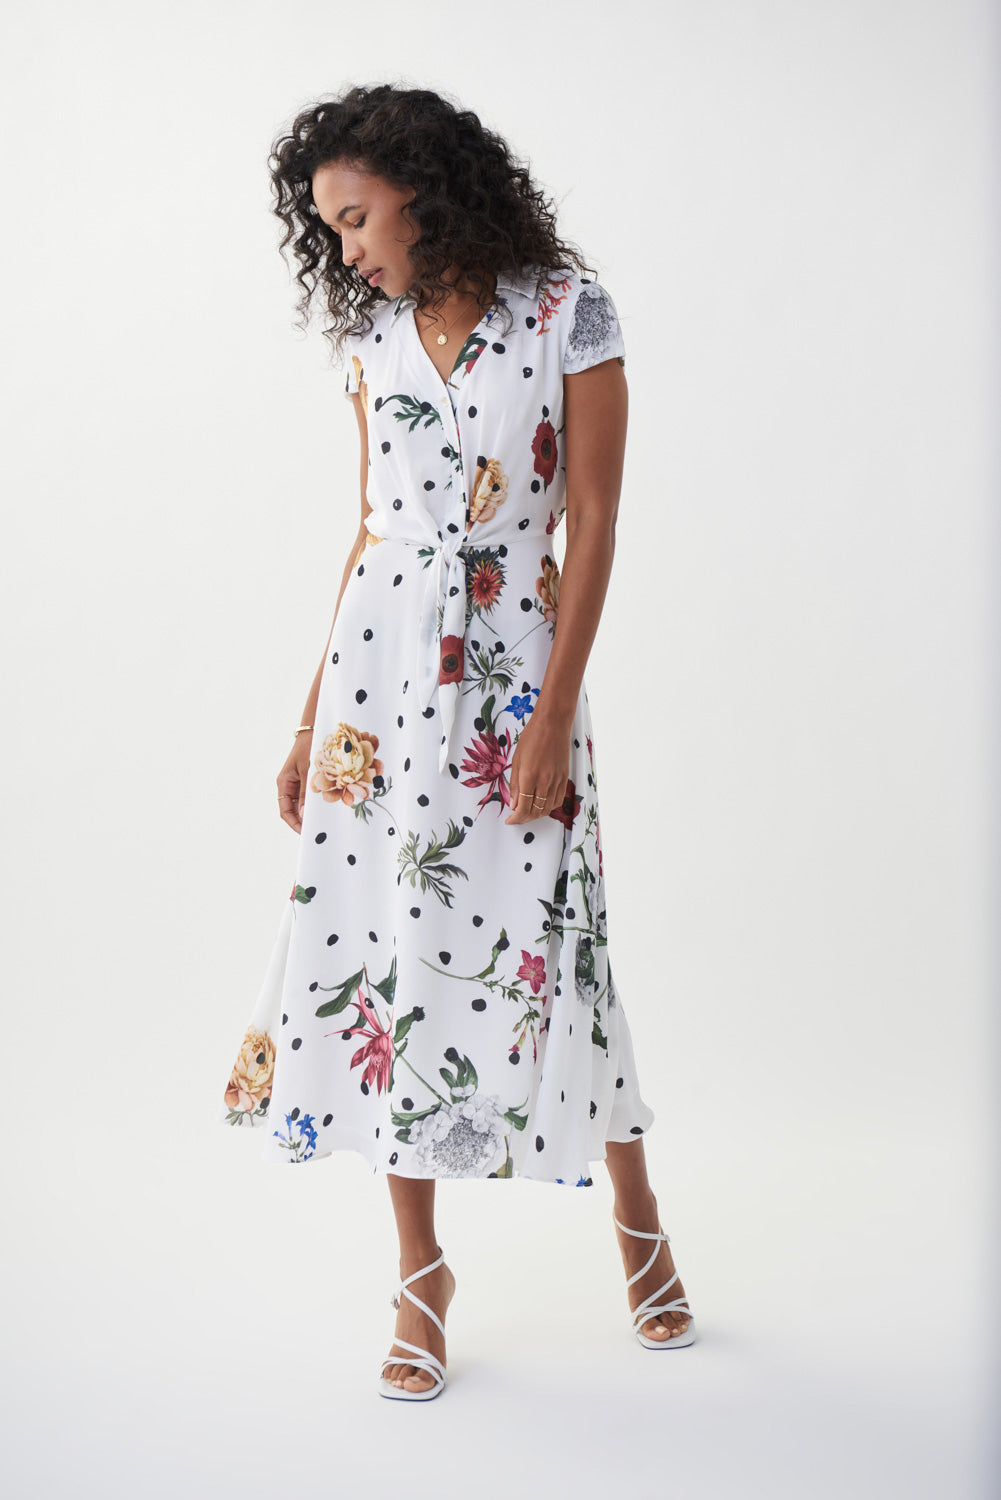 Joseph Ribkoff Vanilla-Multi Floral Fit & Flare Dress Style 222216